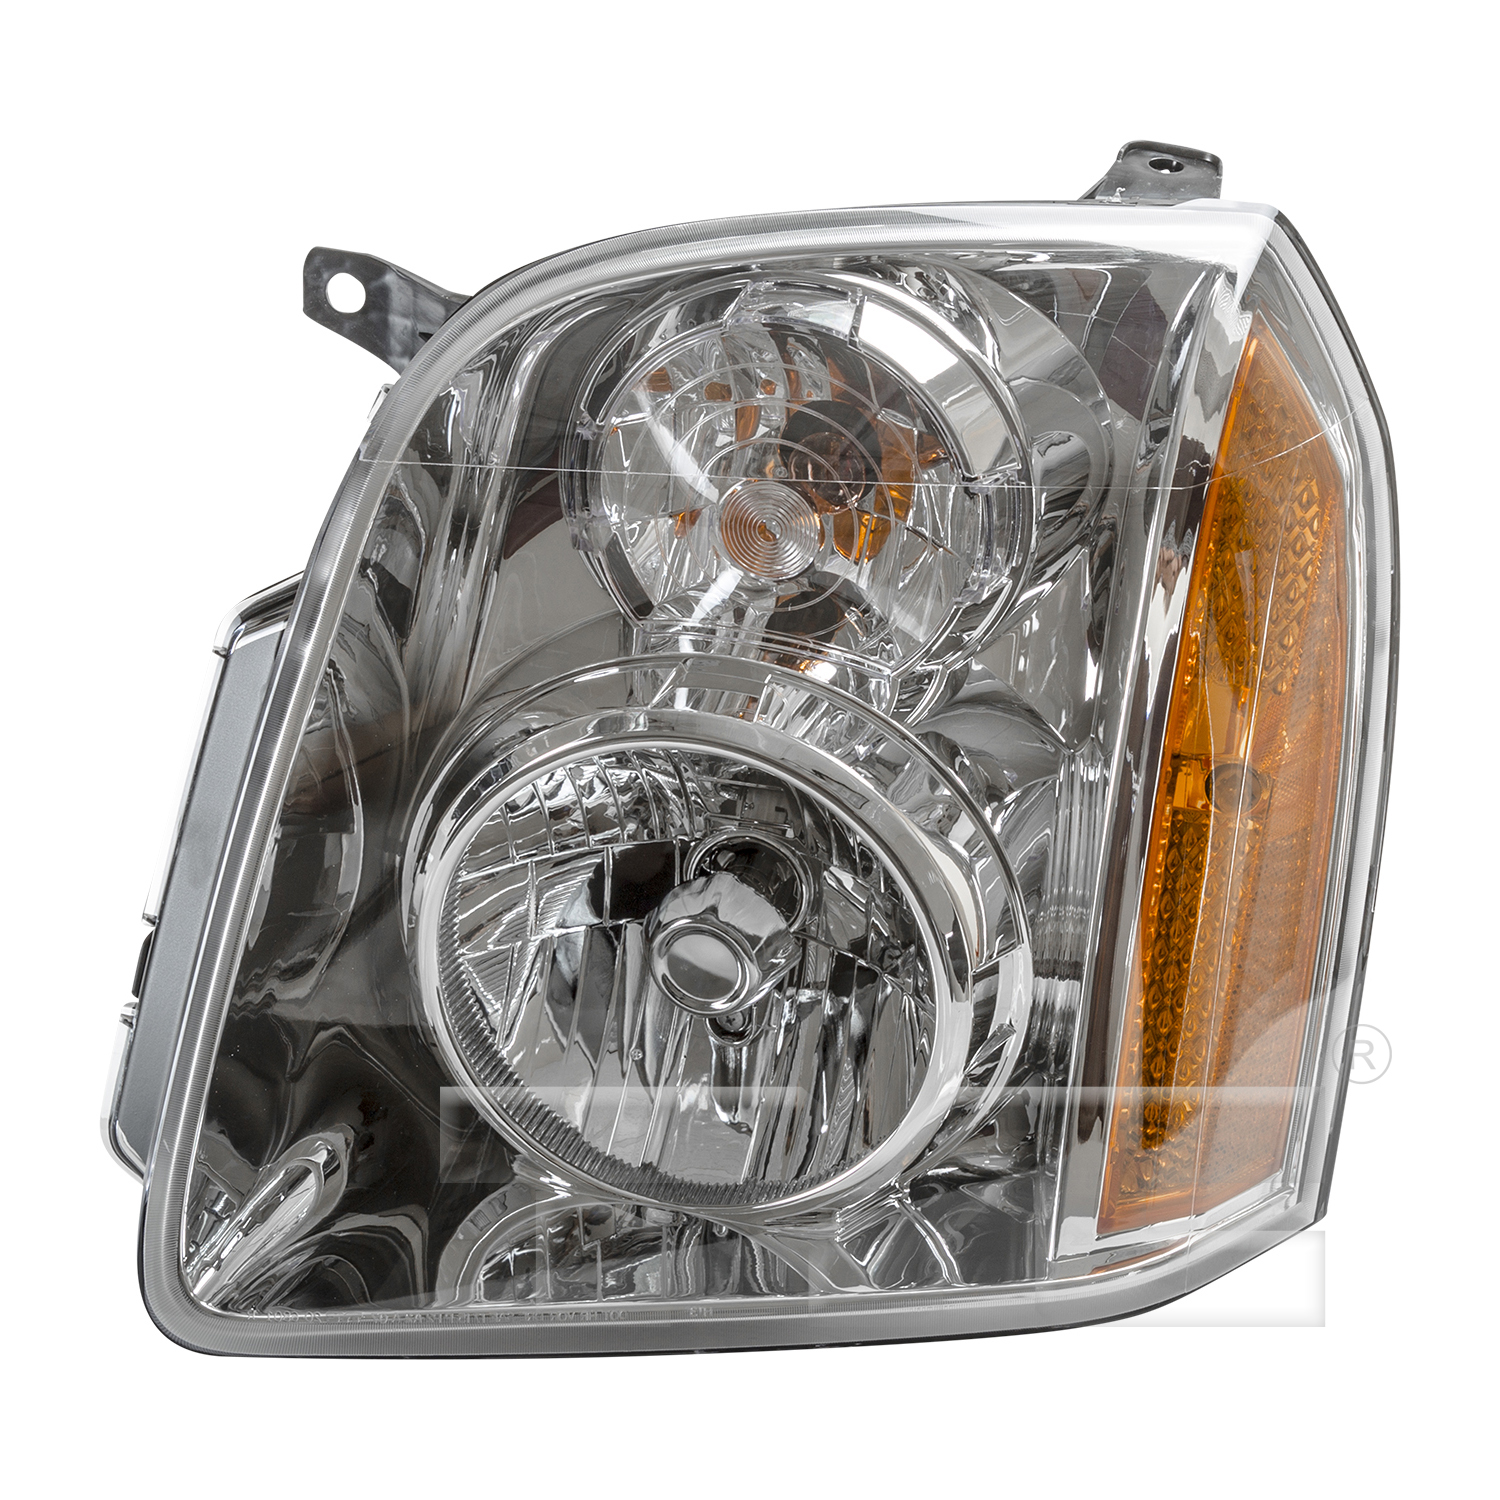 Aftermarket HEADLIGHTS for GMC - YUKON XL 2500, YUKON XL 2500,07-13,LT Headlamp assy composite